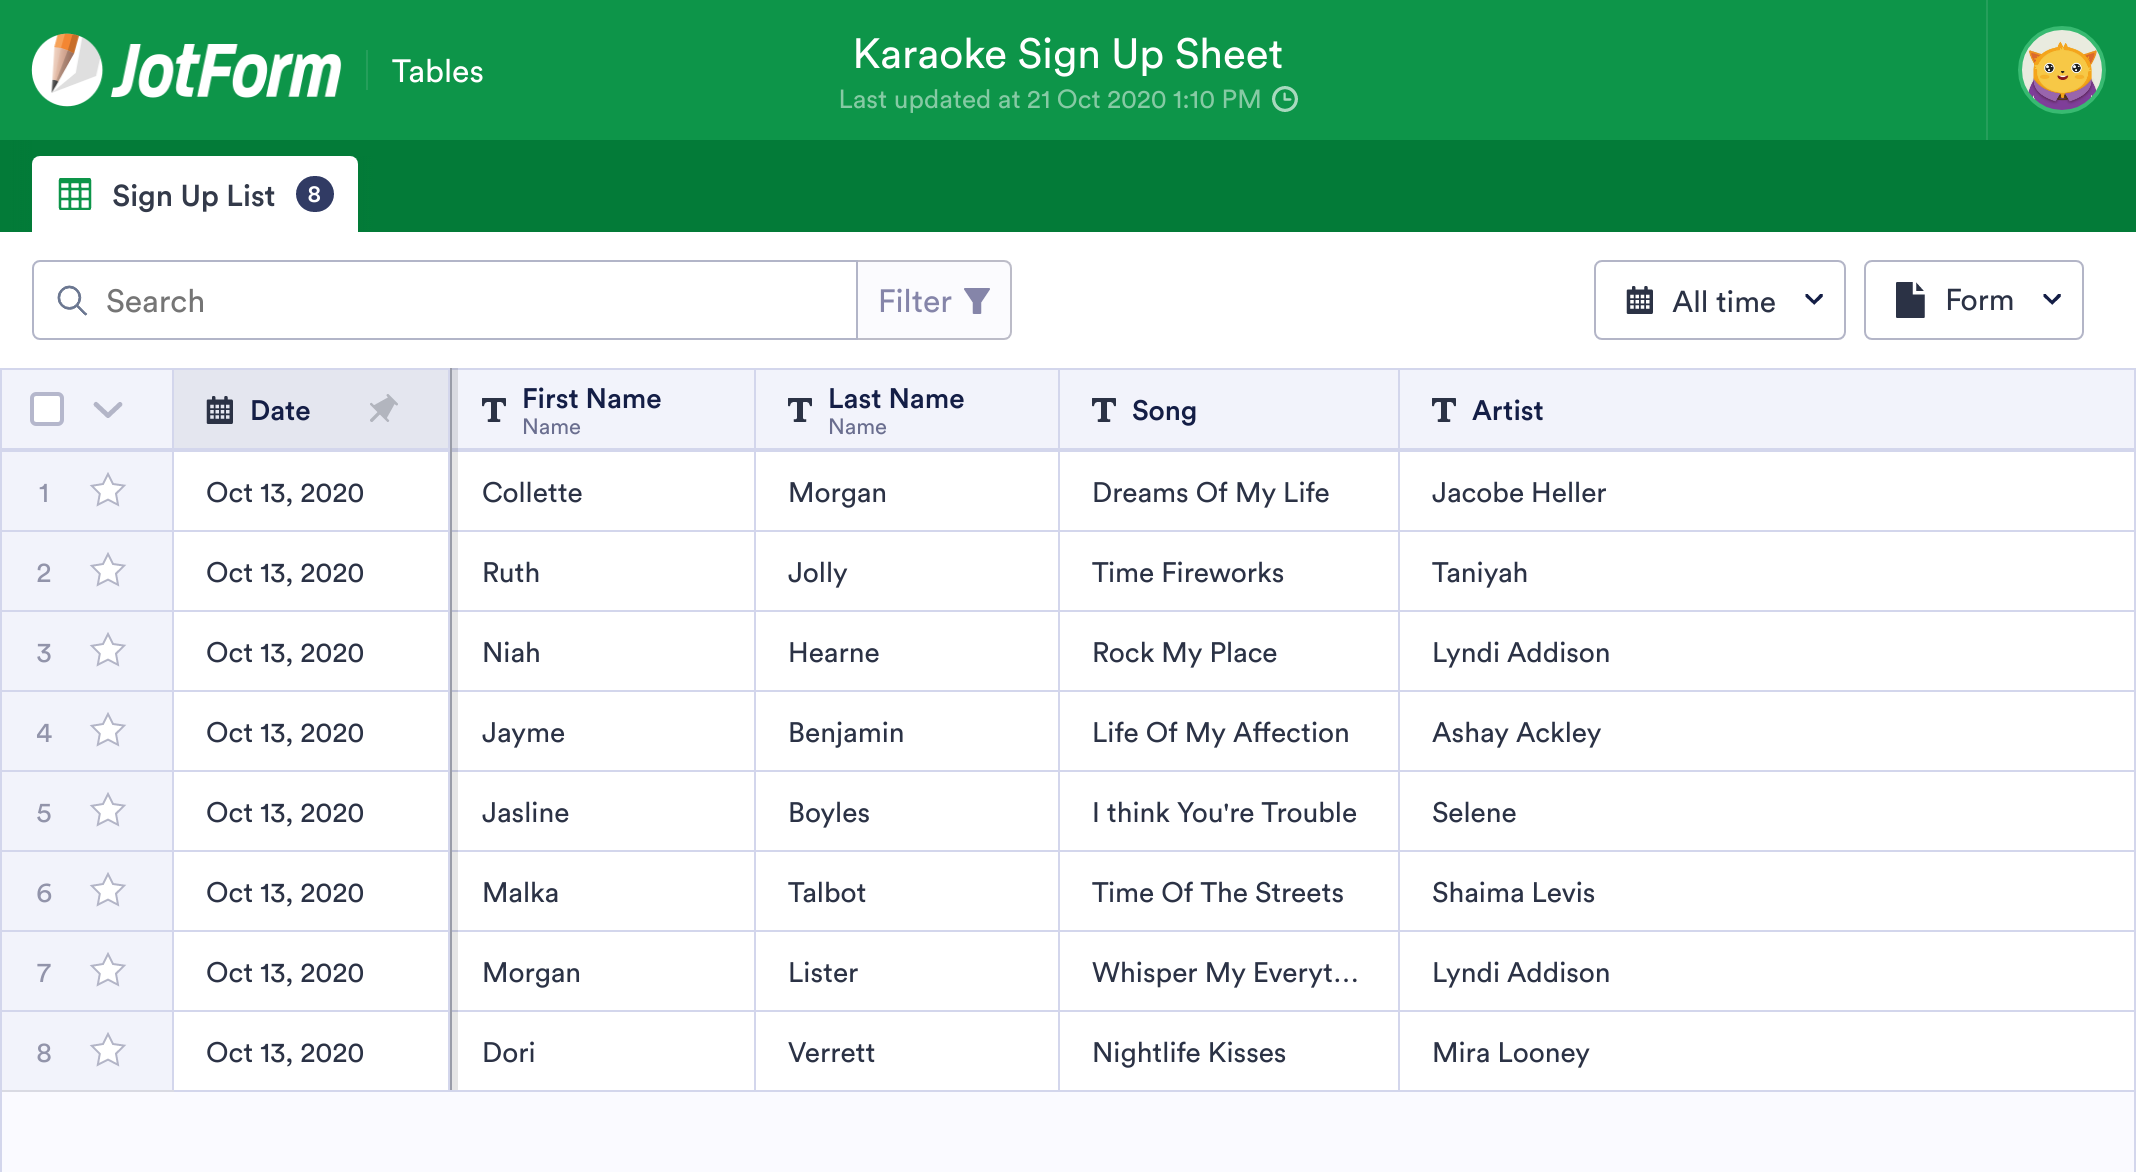 karaoke-sign-up-sheet-template-jotform-tables